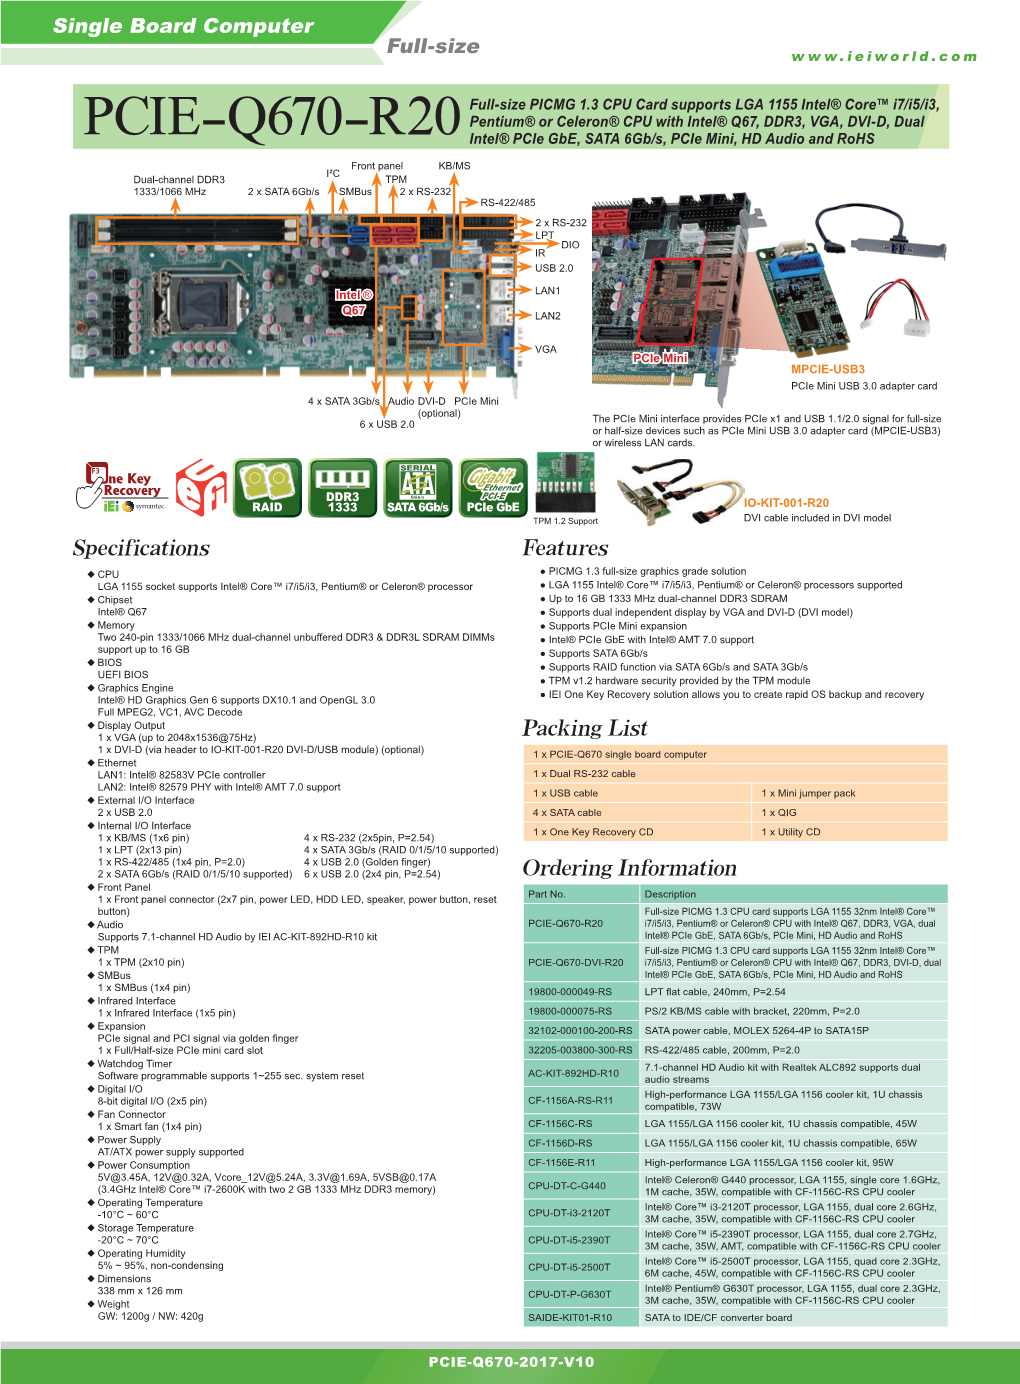 PCIE-Q670-R20 Intel® Pcie Gbe, SATA 6Gb/S, Pcie Mini, HD Audio and Rohs